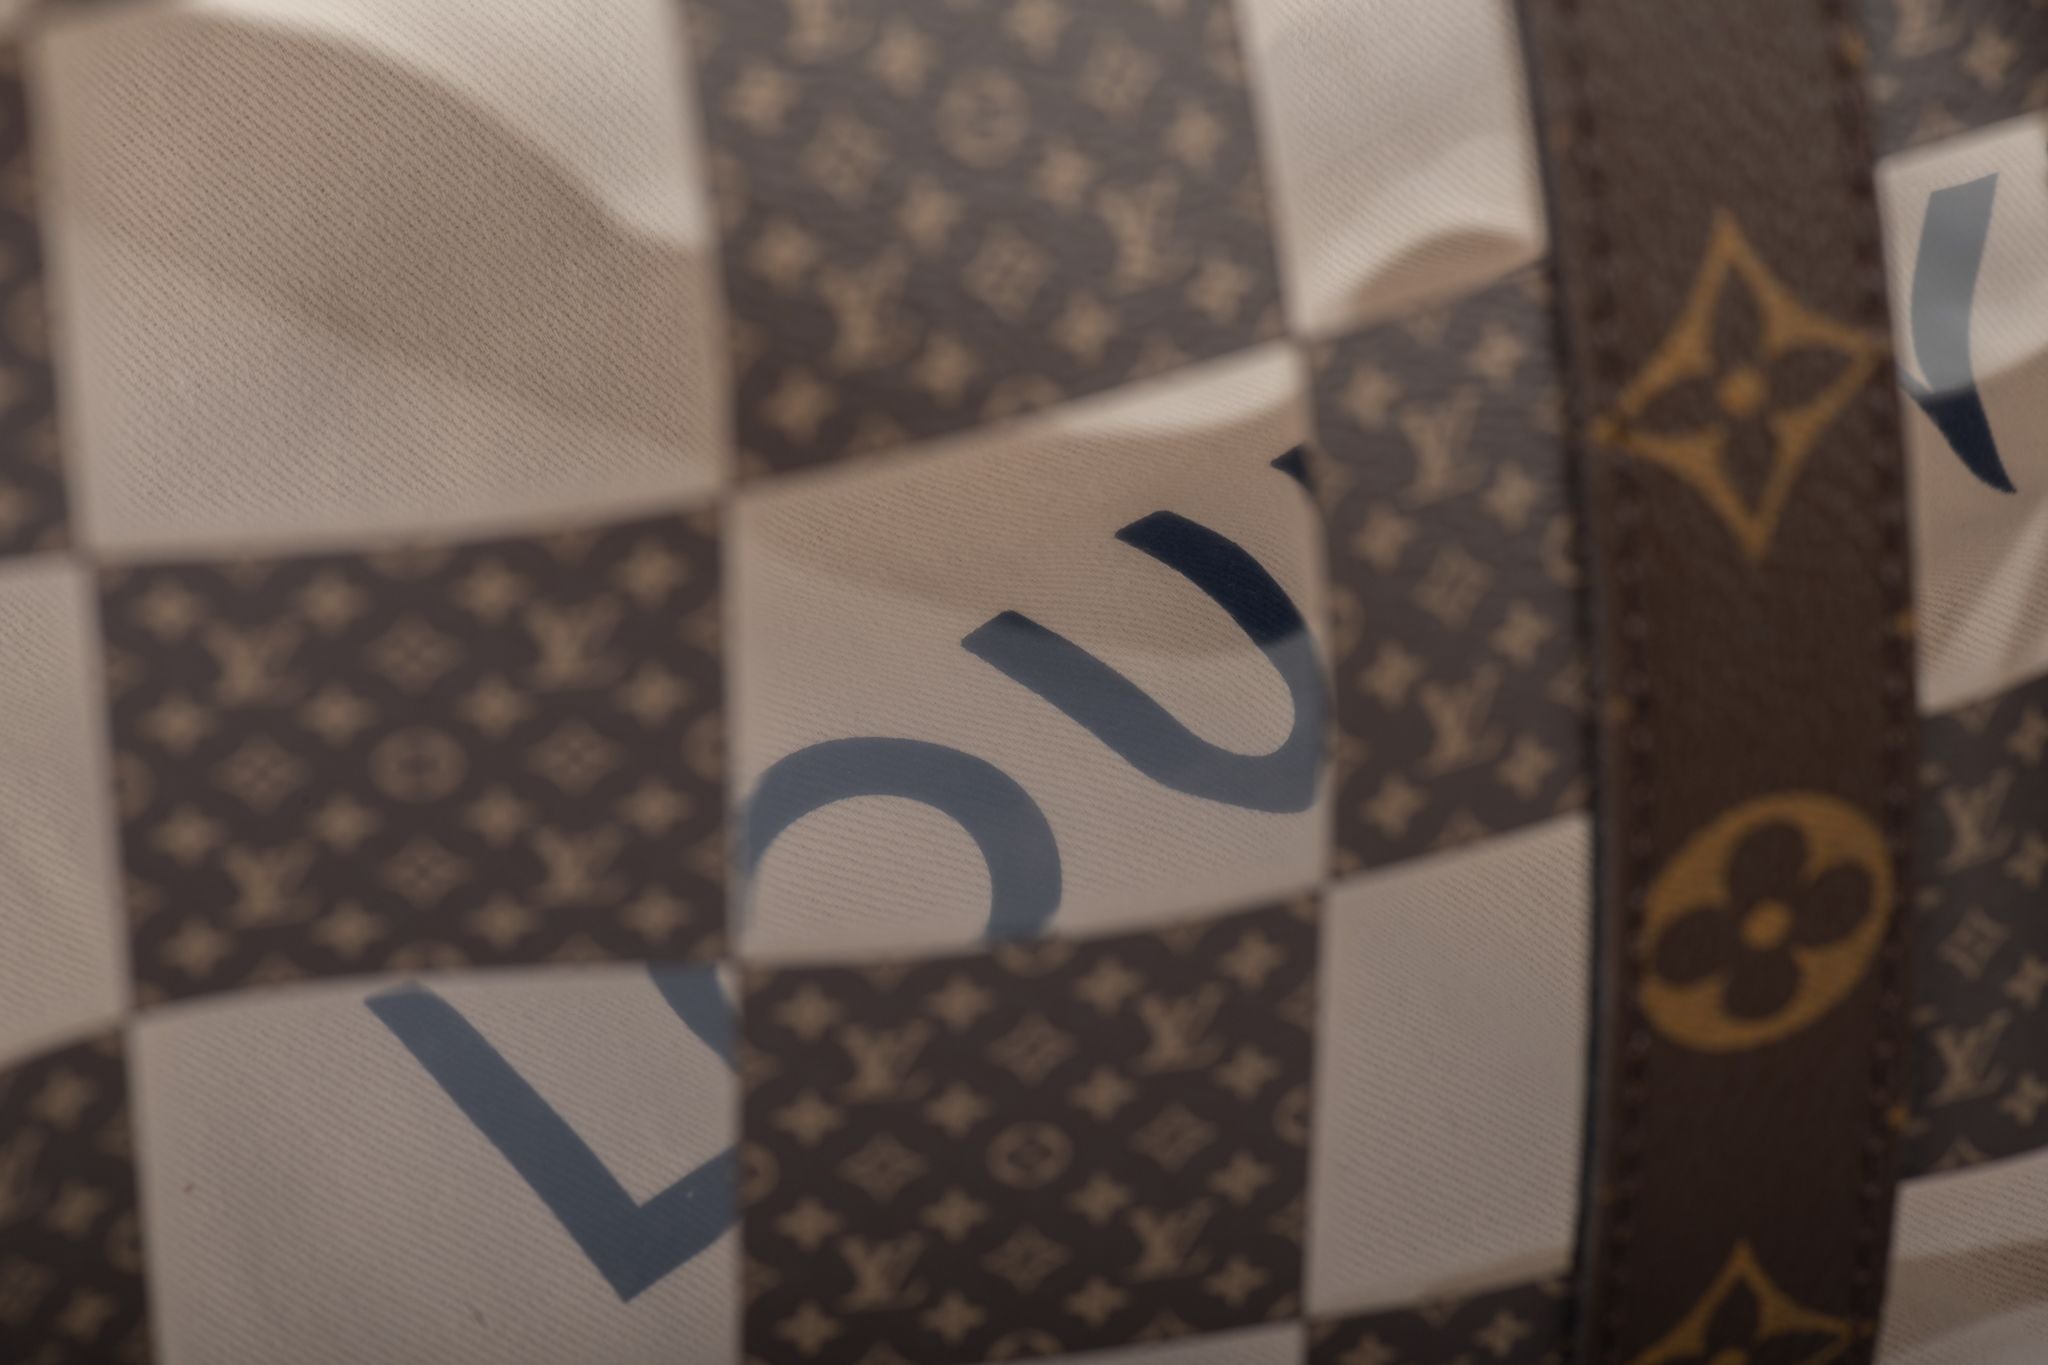 Louis Vuitton Monogram Chess Keepall 50 Bag Louis Vuitton